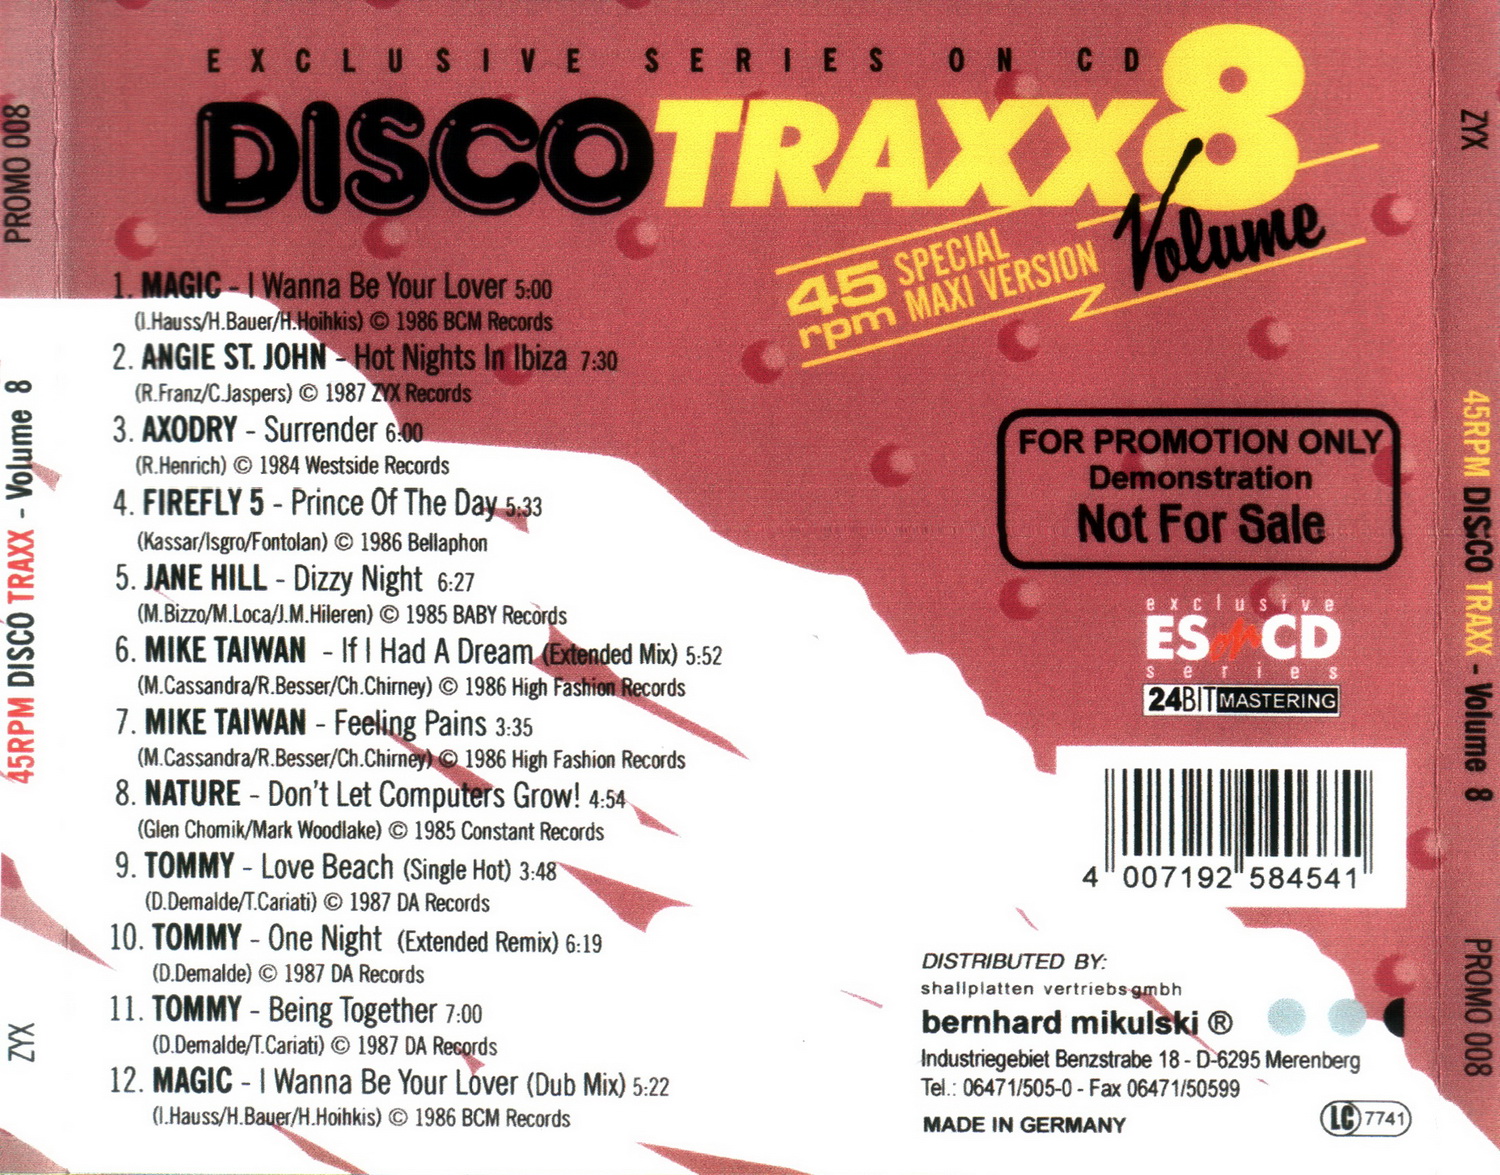 Disco magic. 45rpm Disco Traxx Vol 3. 45rpm Disco Traxx Vol.01-11 (1993-1995). 45rpm Disco Traxx 5. 45rpm Disco Traxx 7.